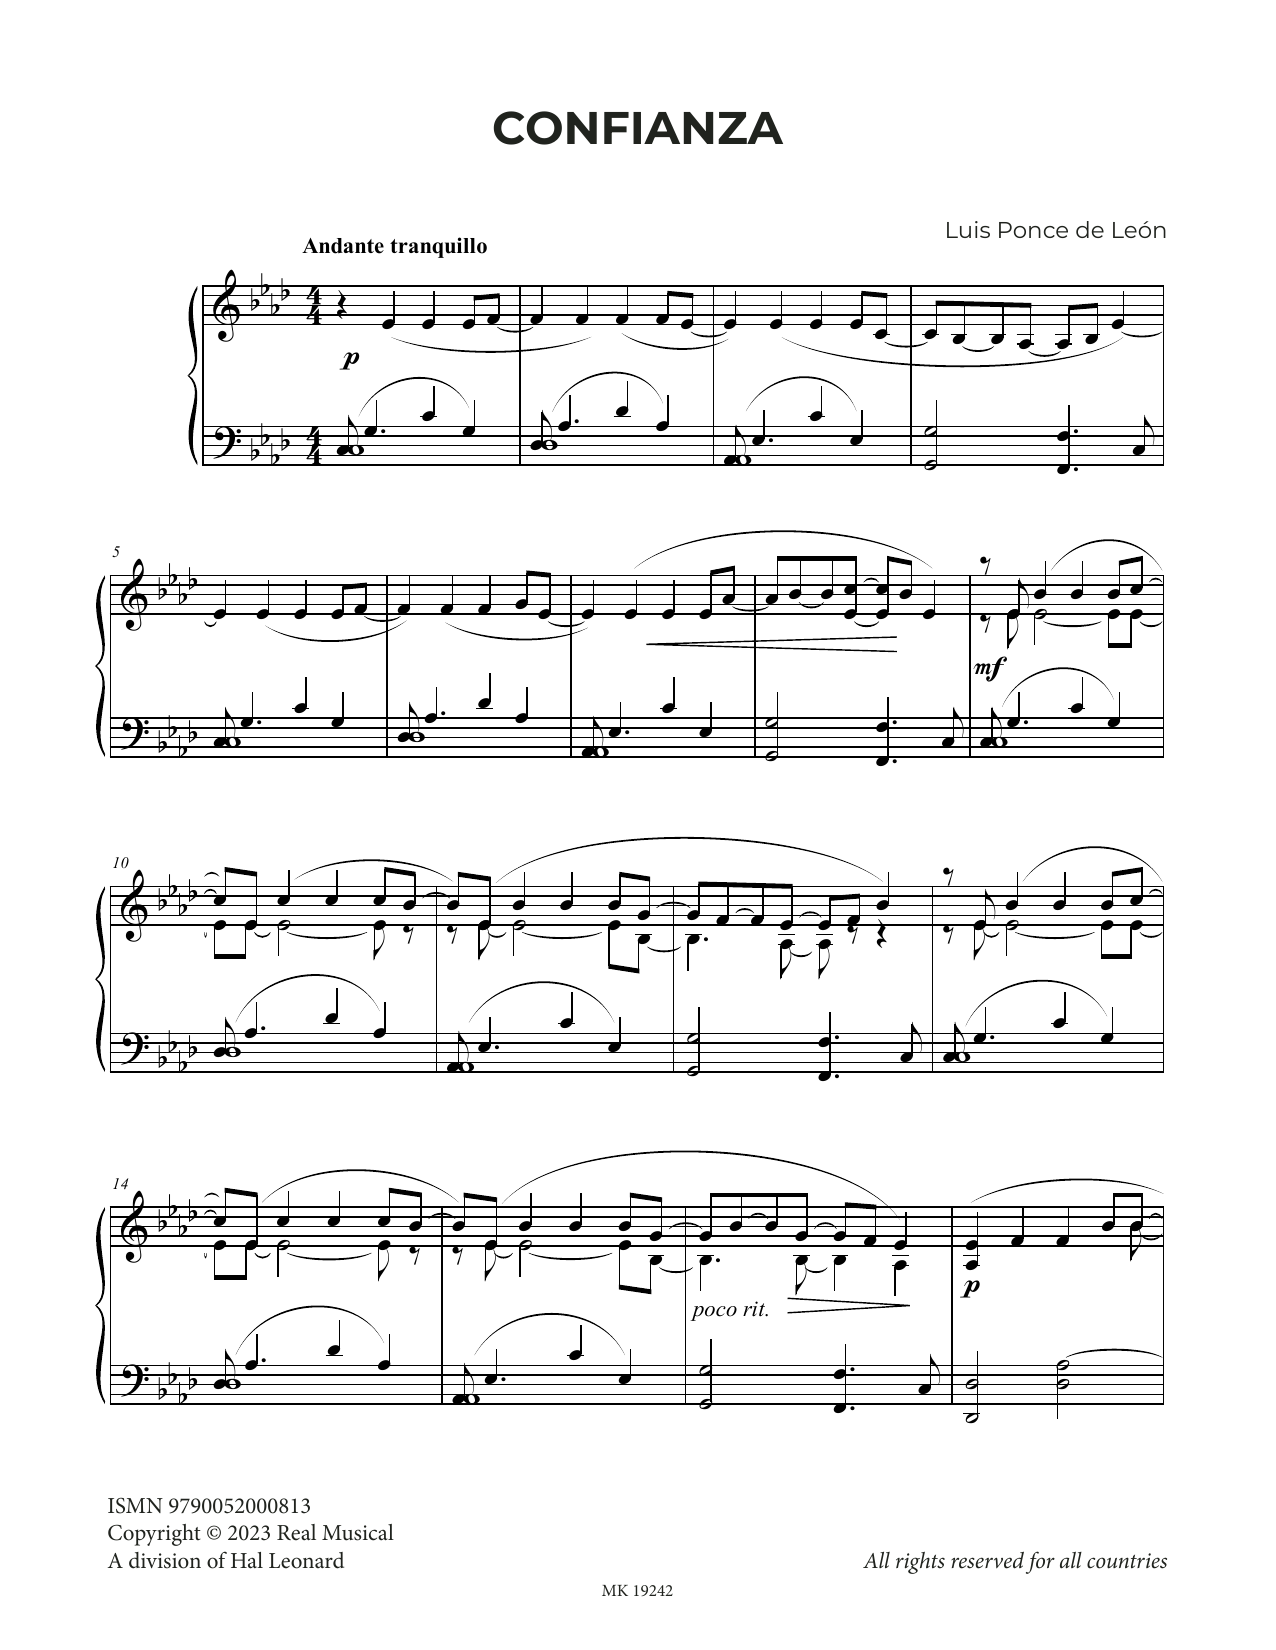 Luis Ponce de León Confianza sheet music notes and chords arranged for Piano Solo